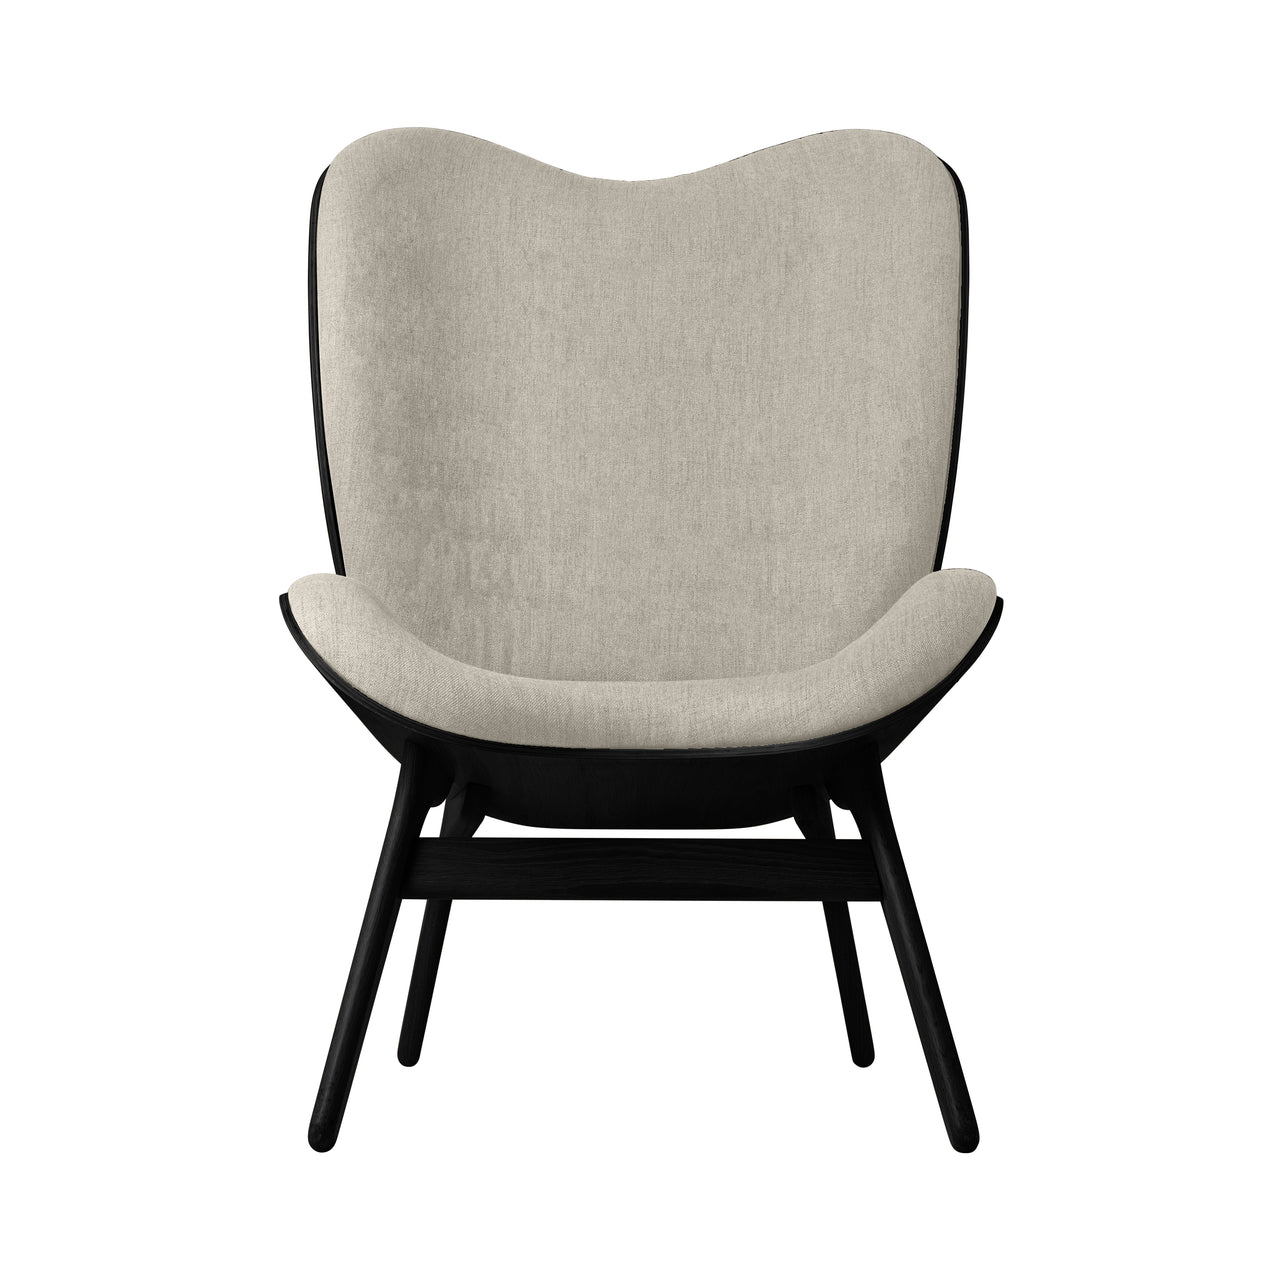 A Conversation Piece Lounge Chair: Tall + Black Oak + White Sands